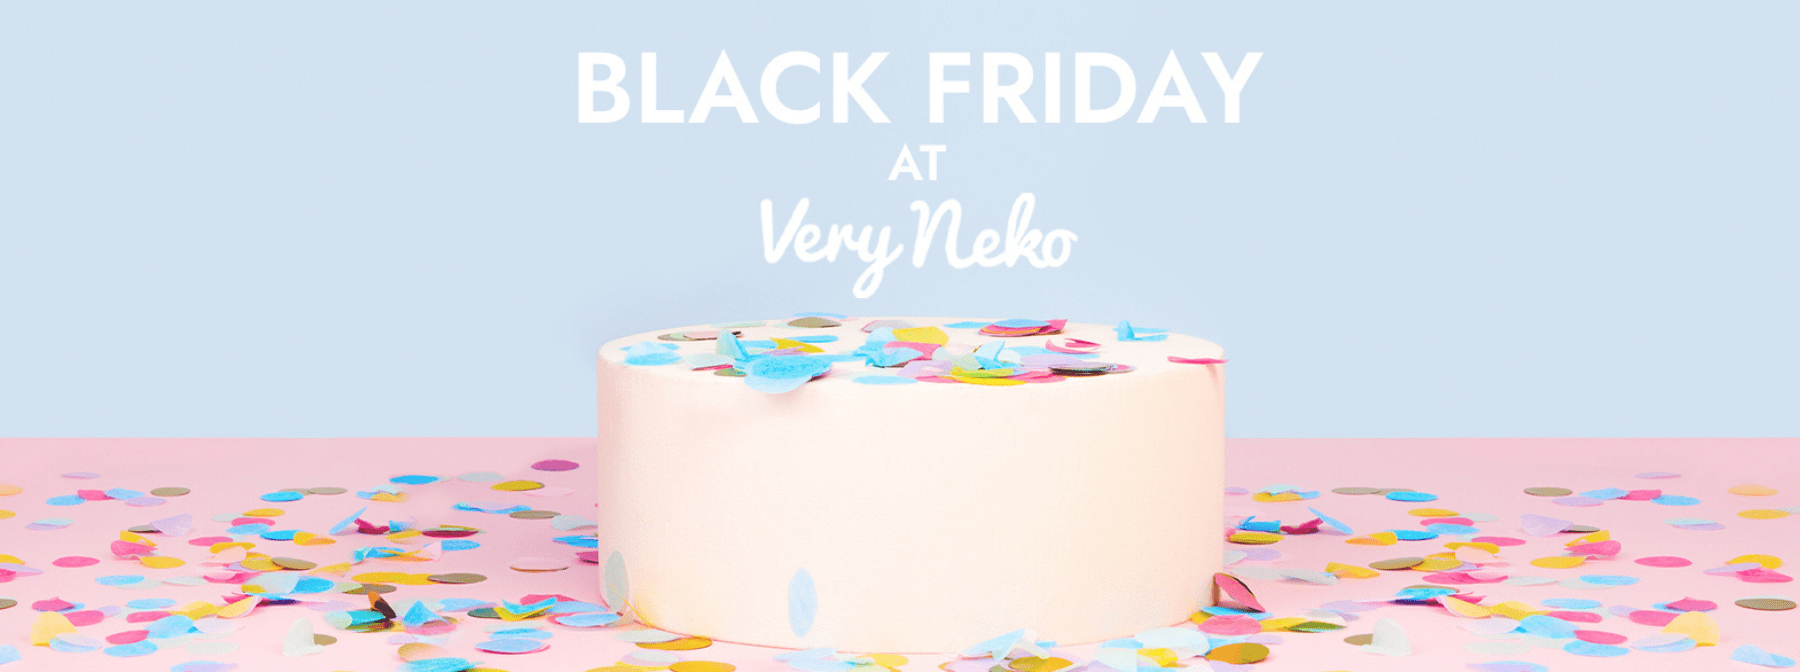 Black Friday At VeryNeko: What’s Happening